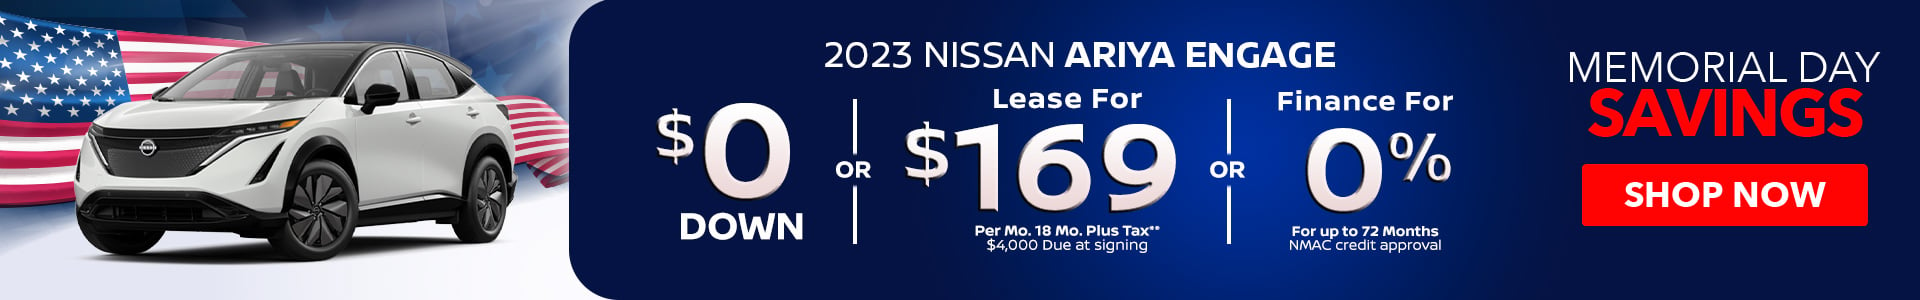 2023 Nissan ARIYA - Lease for $169